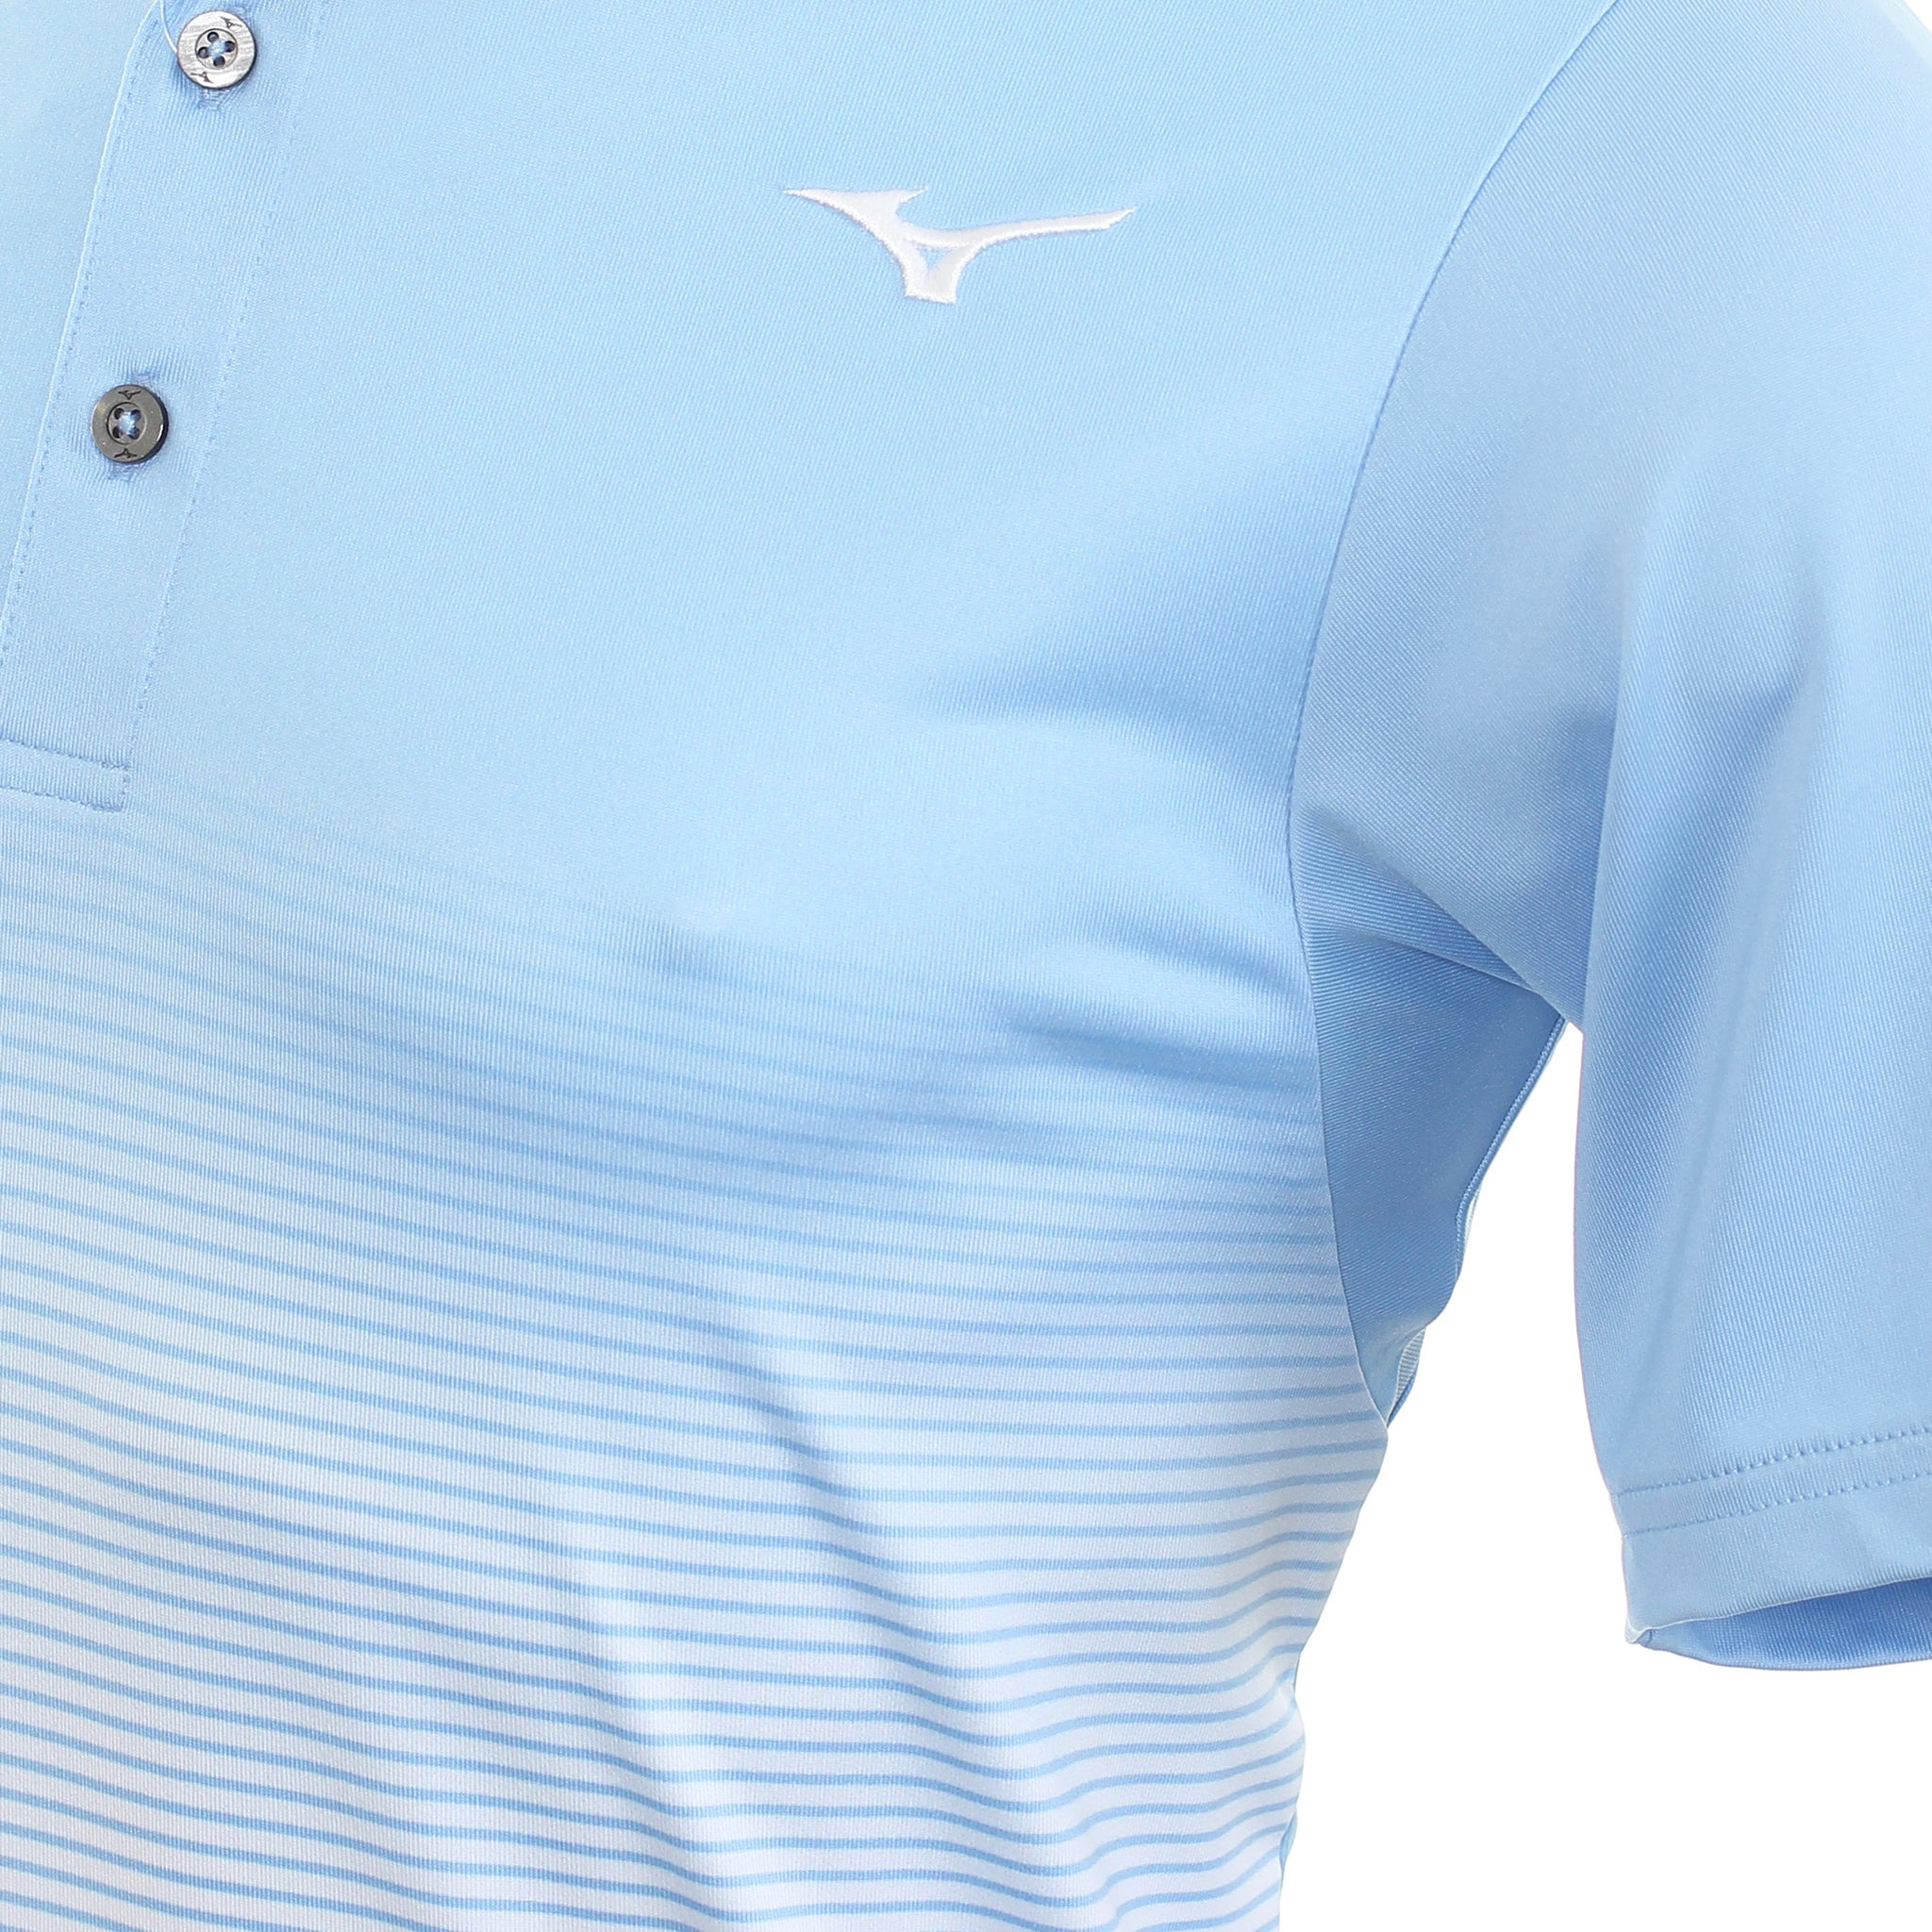 mizuno-golf-qd-mirage-shirt-52ga1006-blue-bell-19